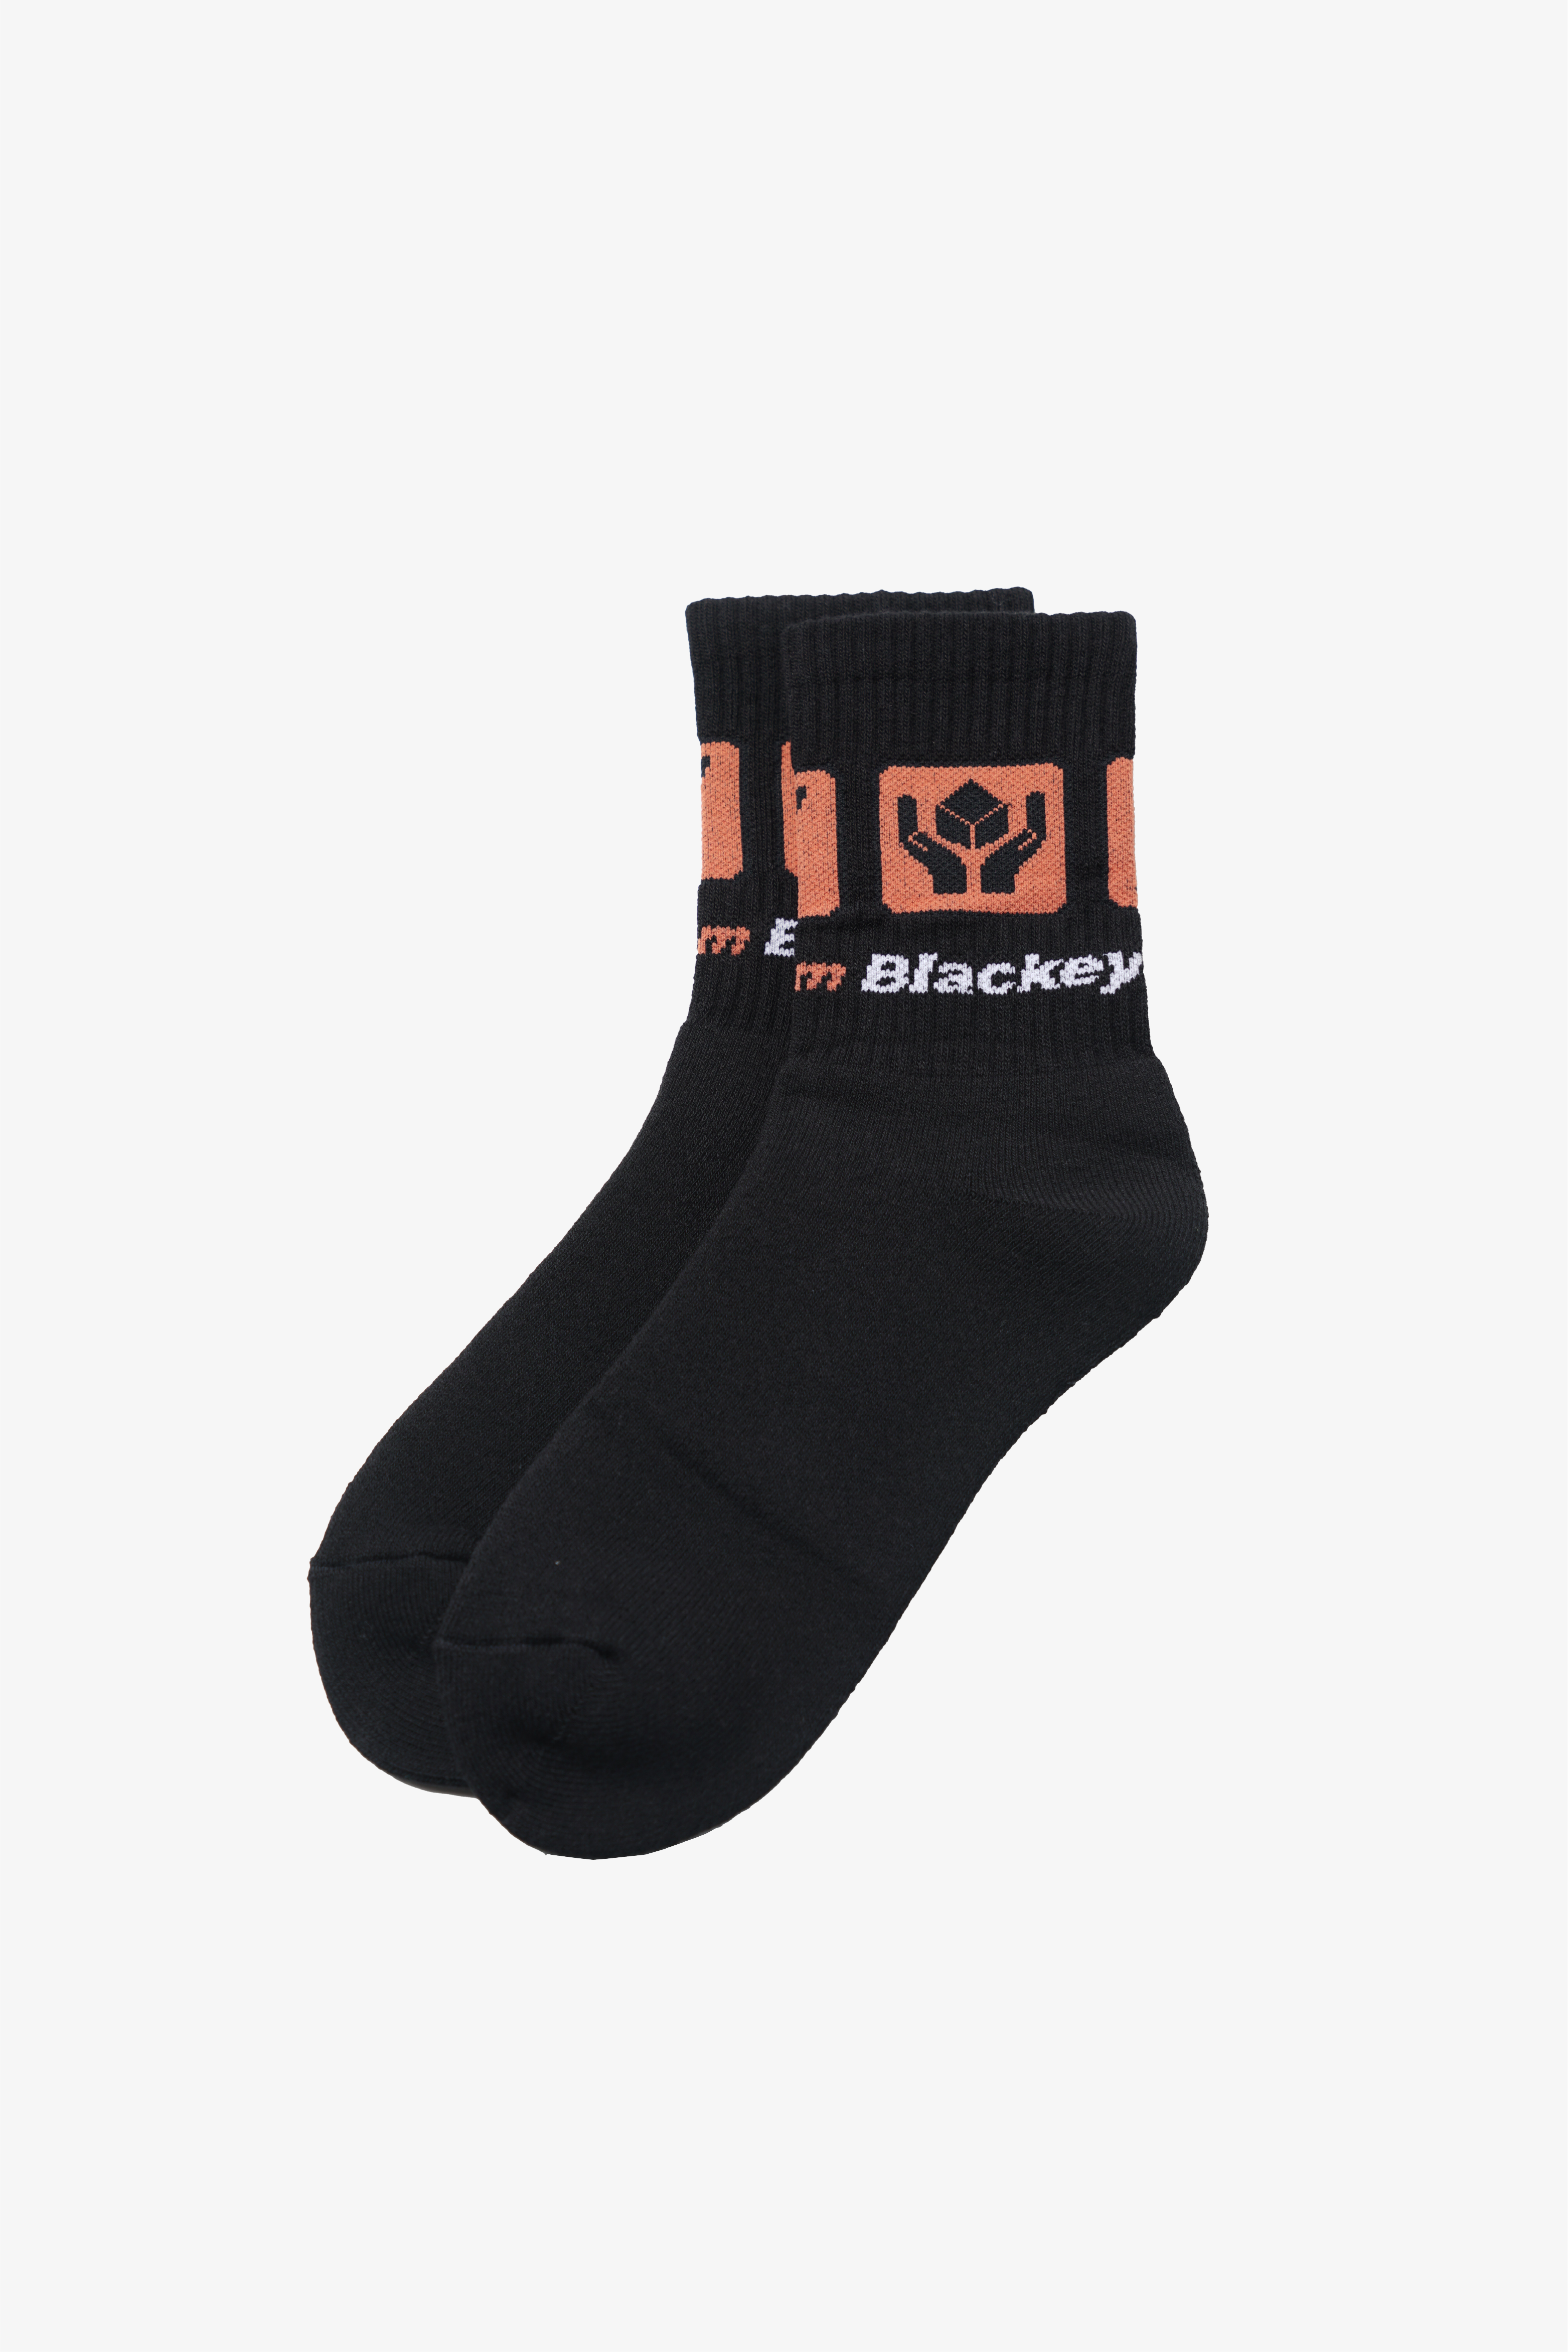 Selectshop FRAME - BLACKEYEPATCH Dotcom Socks All-Accessories Dubai